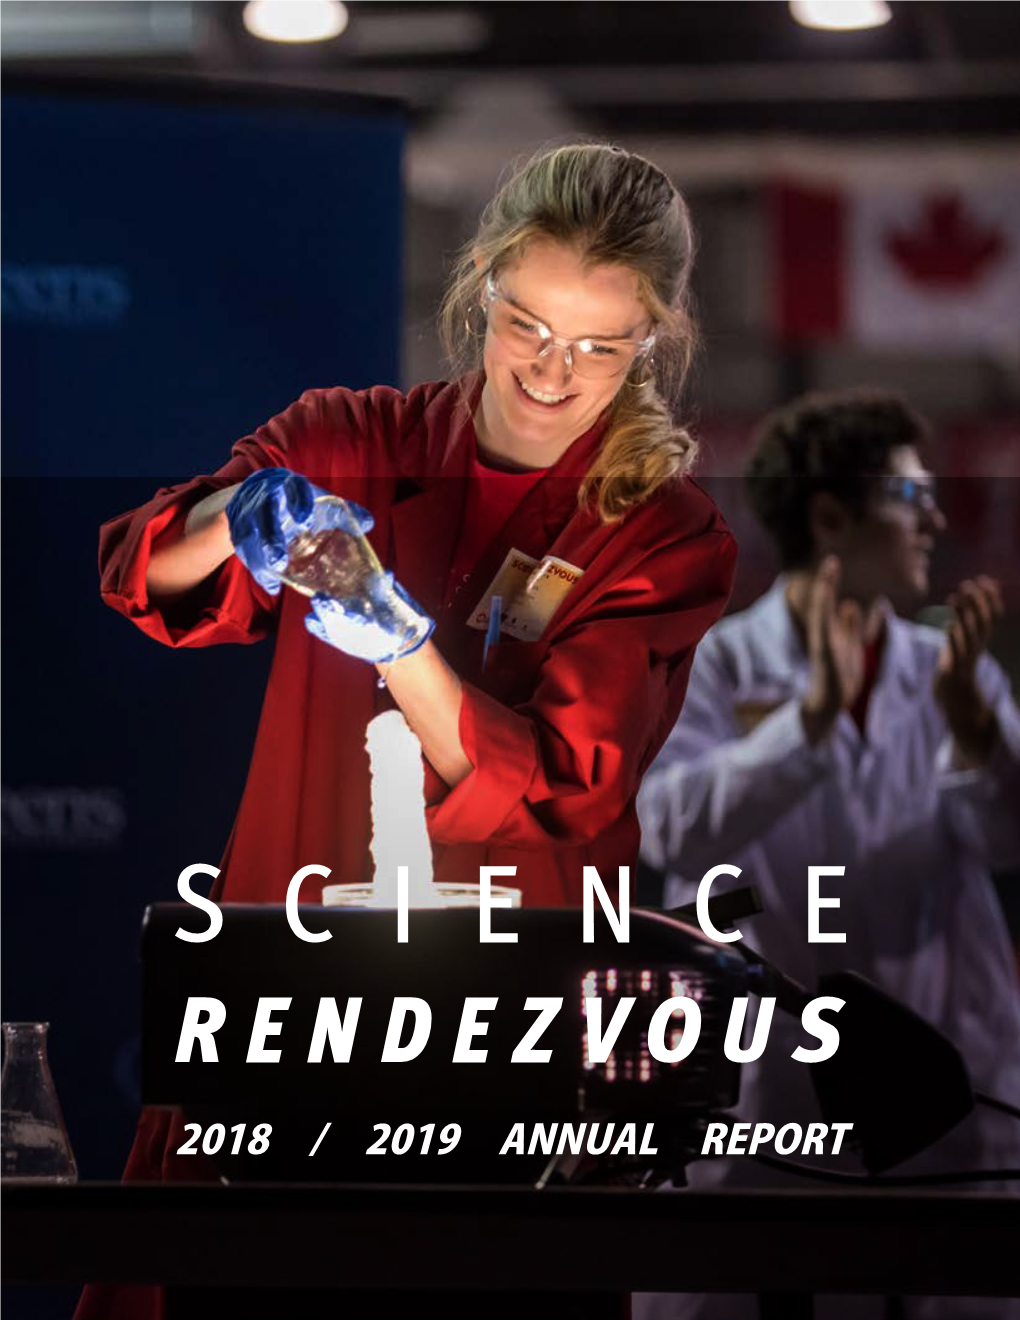 2018 / 2019 Annual Report